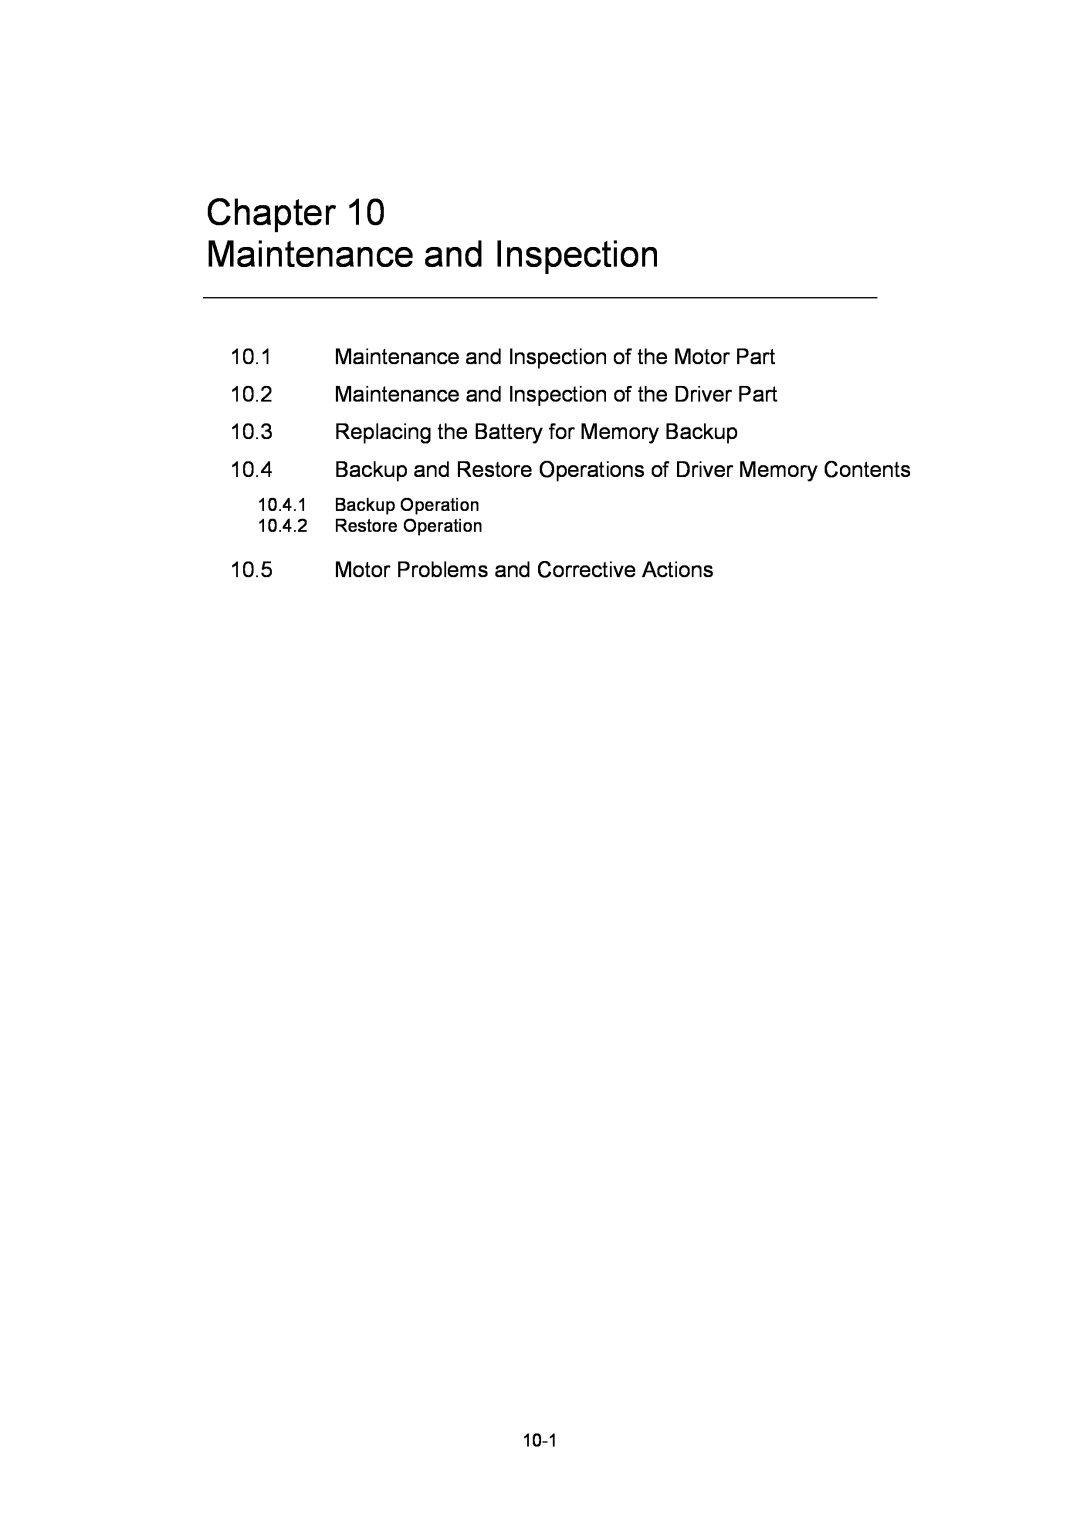 Parker Hannifin G2 manual Chapter Maintenance and Inspection, Maintenance and Inspection of the Motor Part, 10-1 